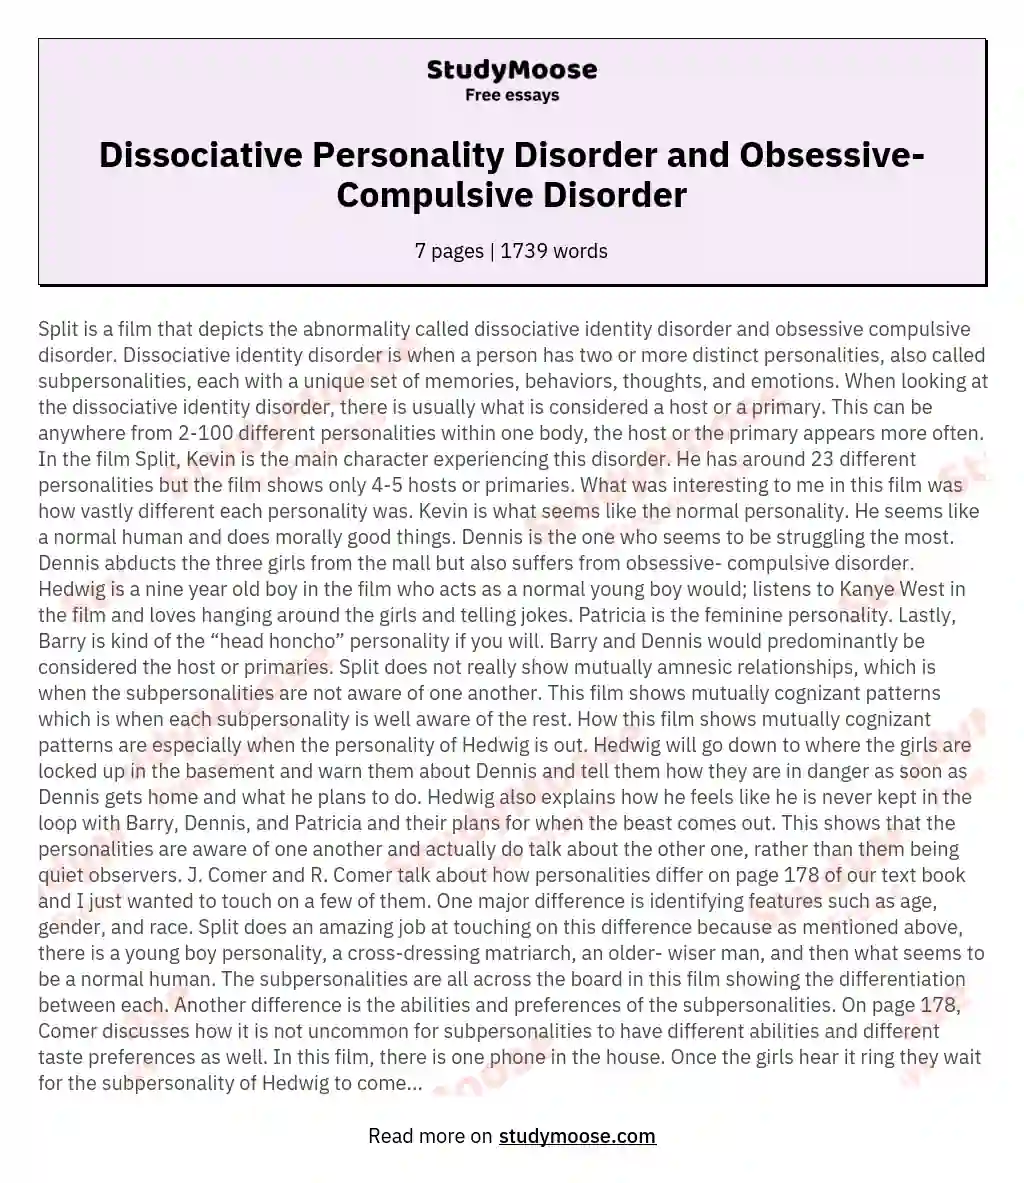 Dissociative Personality Disorder and Obsessive-Compulsive Disorder essay